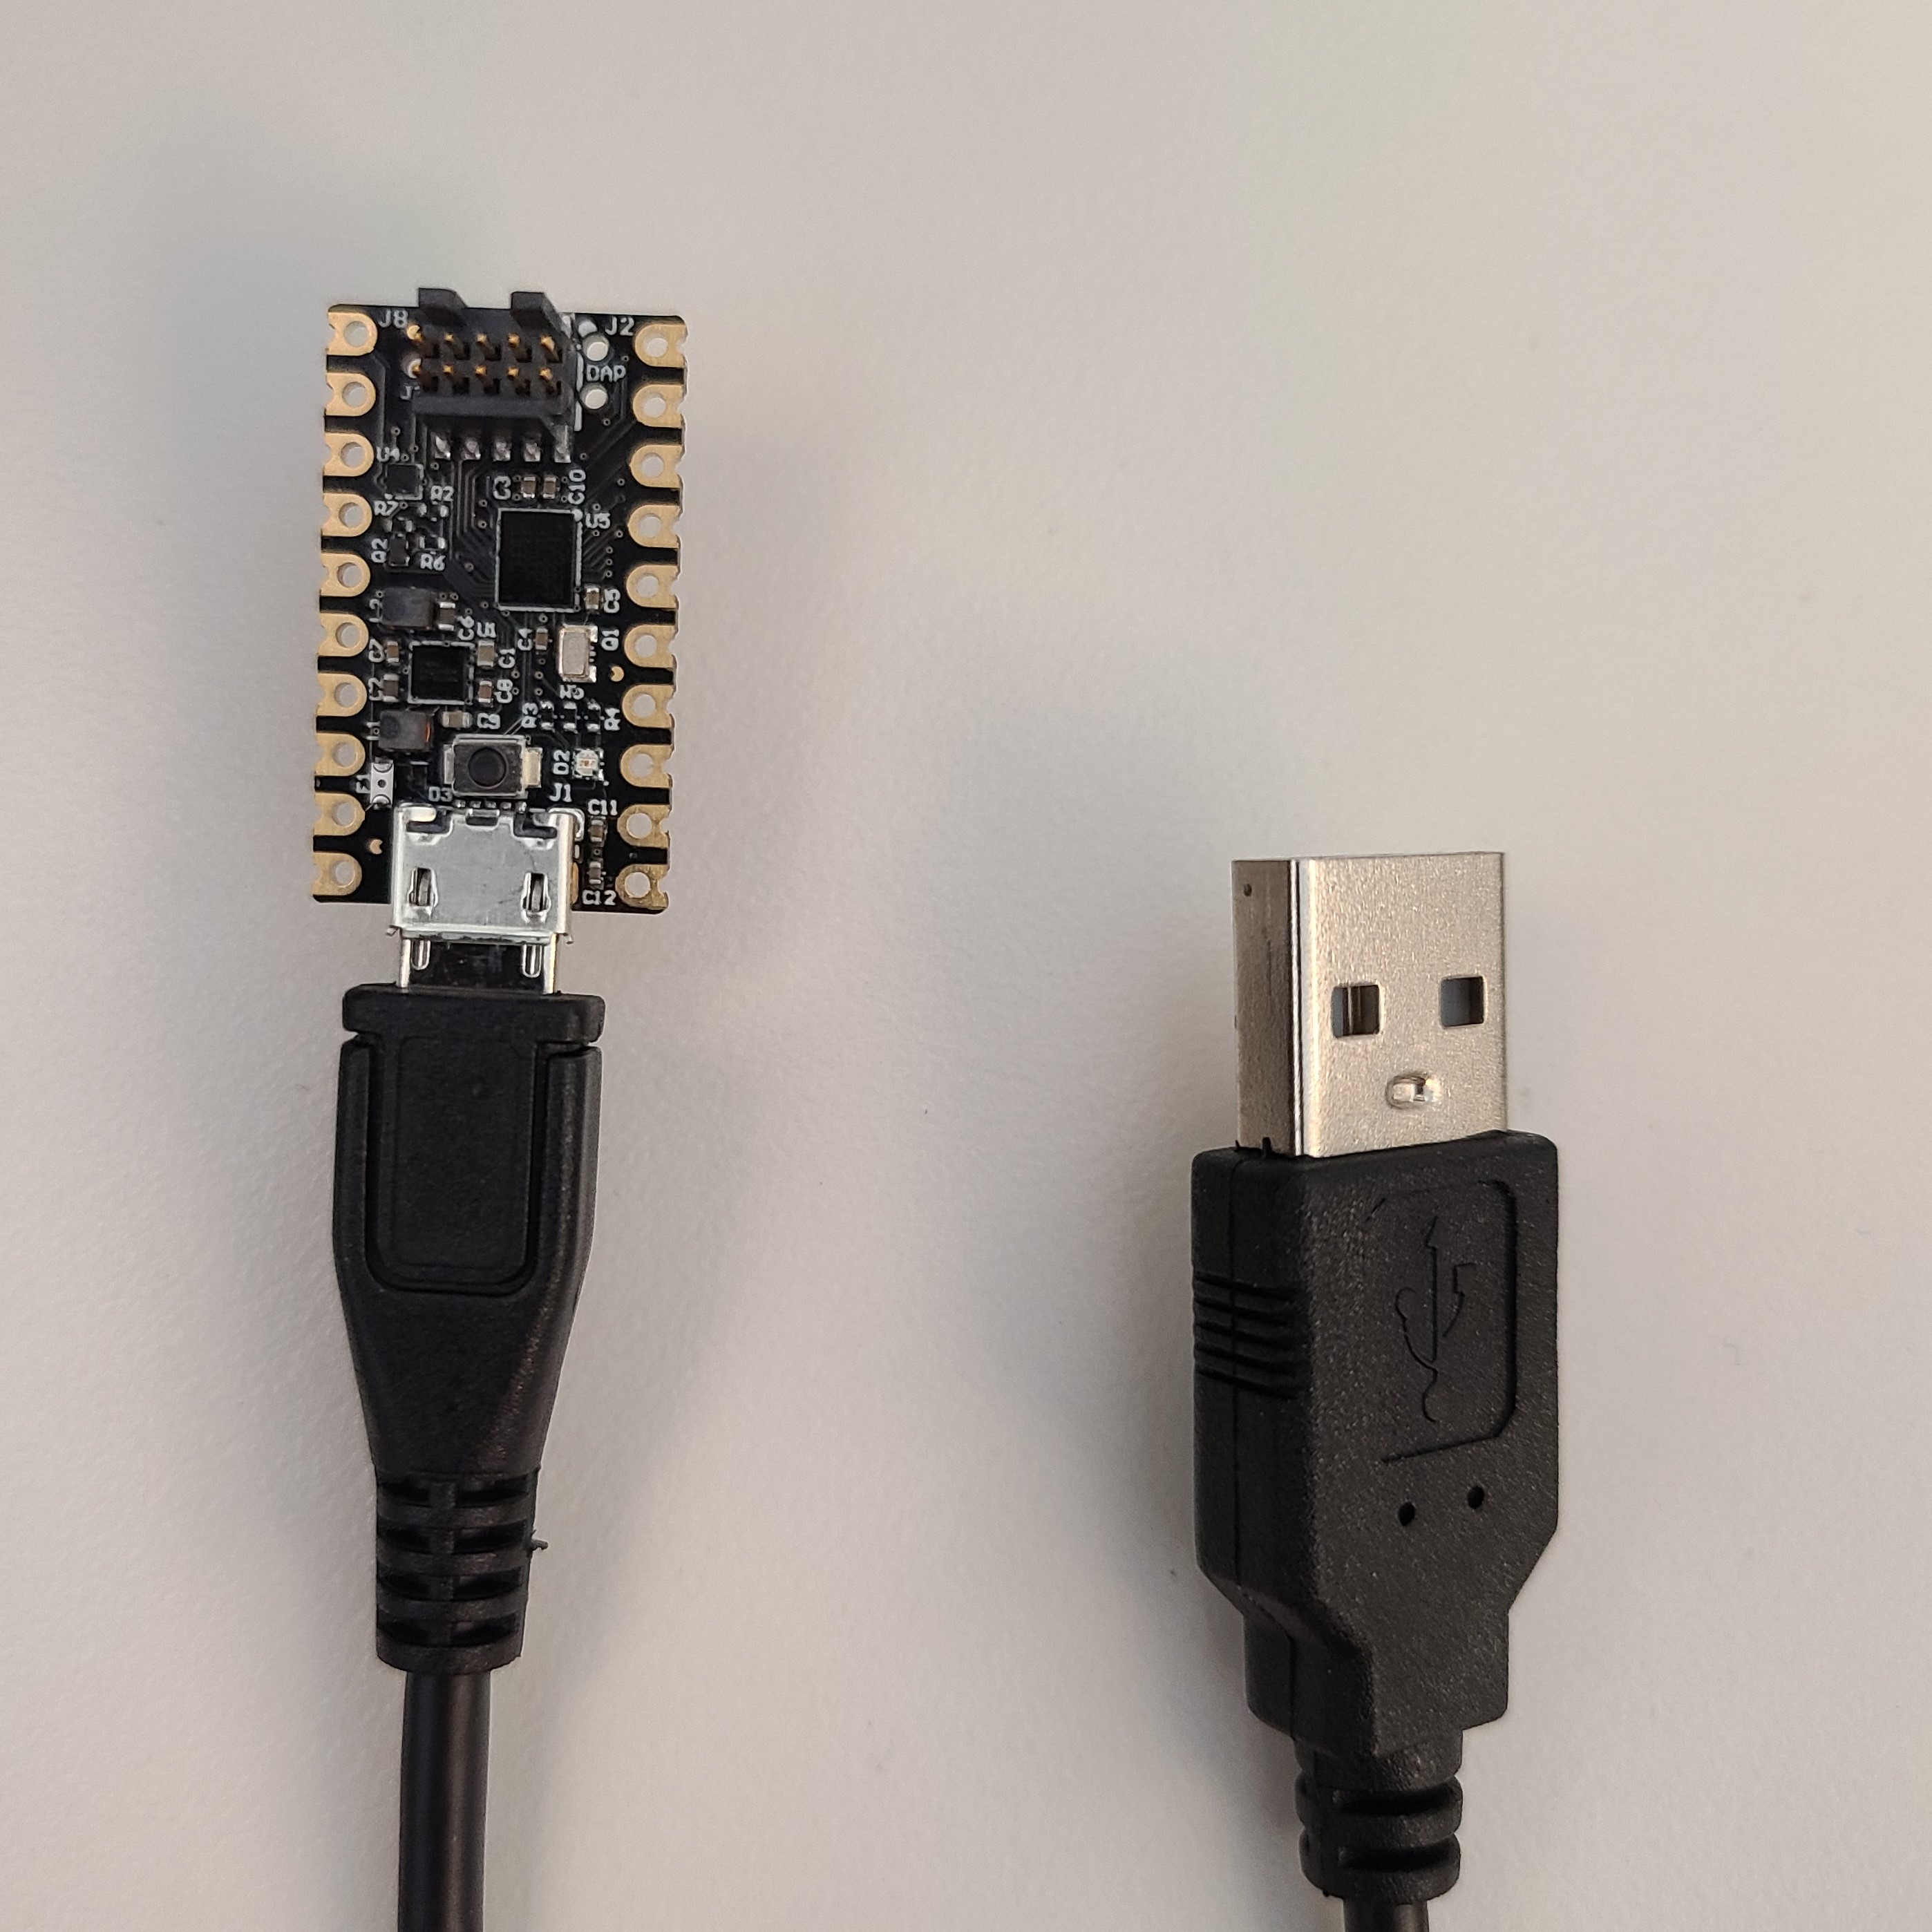 Pico USB Connection